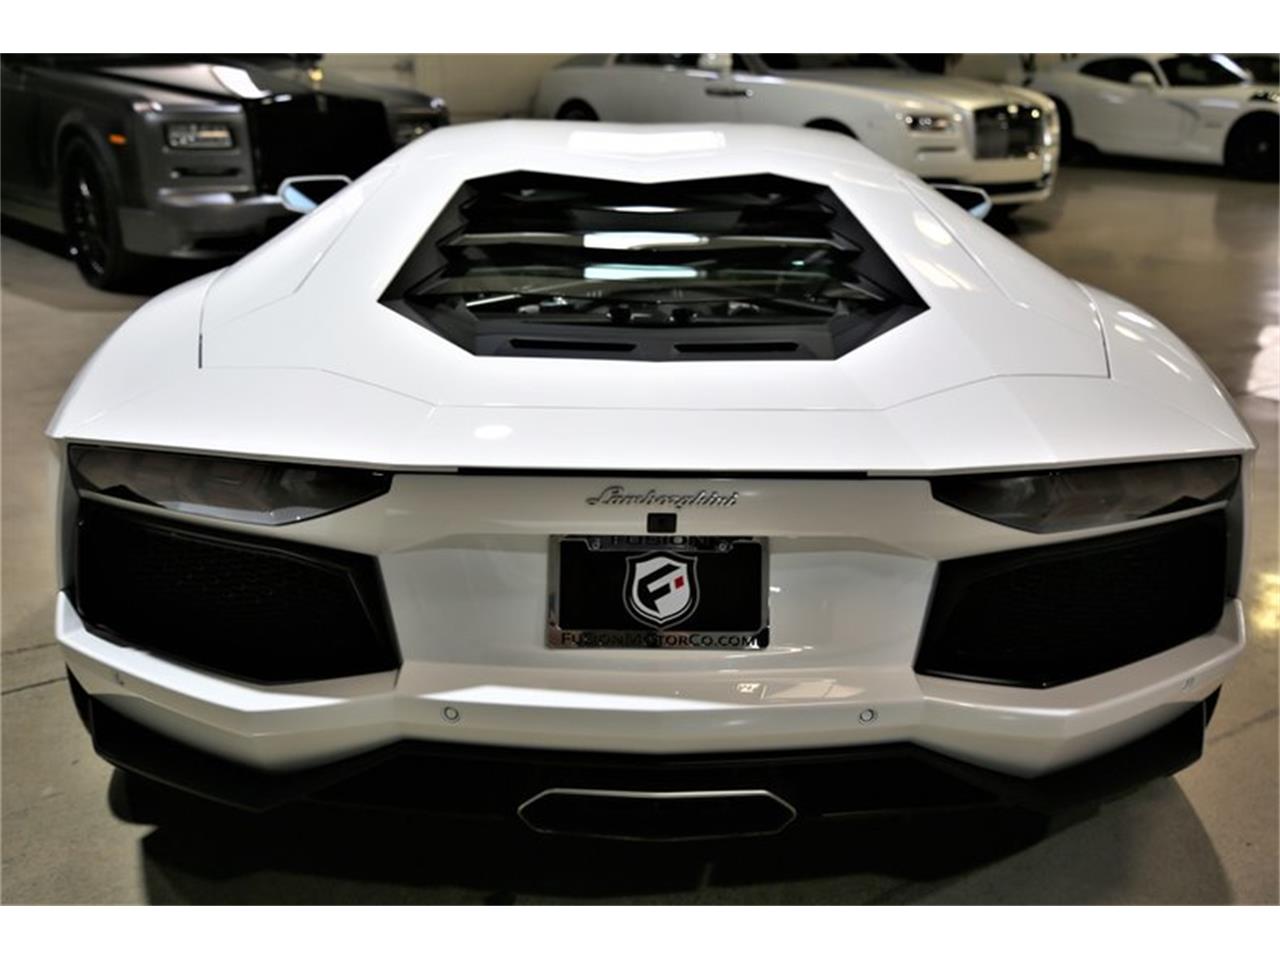 2013 Lamborghini Aventador for Sale | ClassicCars.com | CC ...